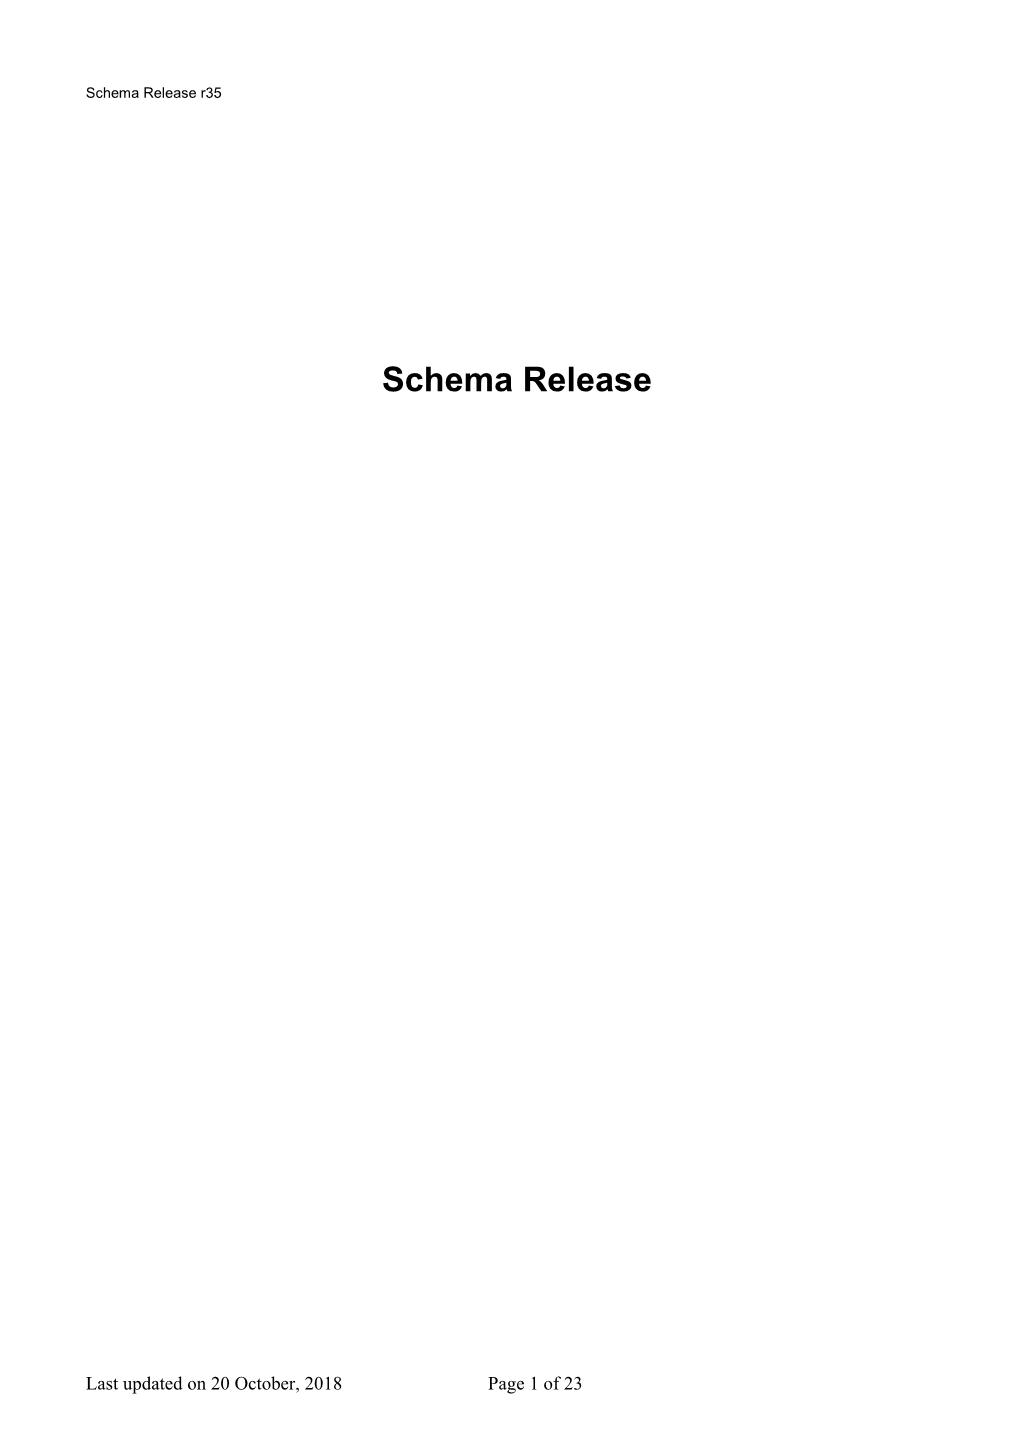 Asexml Schema Release Notes R35